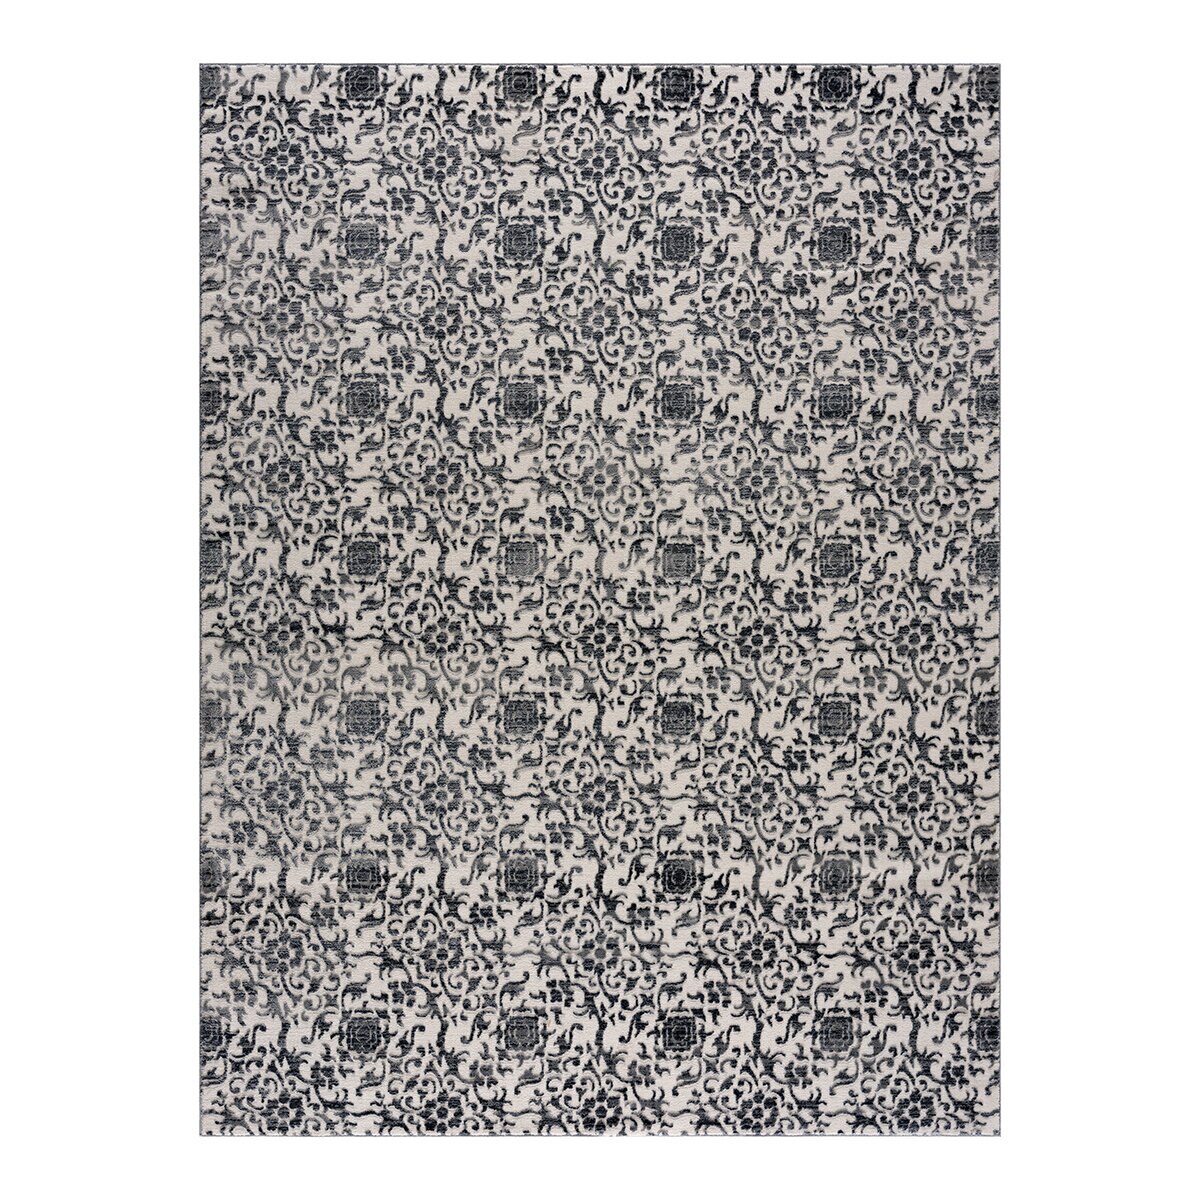 Art Carpet & Art Home, Tapete Decorativo 228cm x 304cm, gris